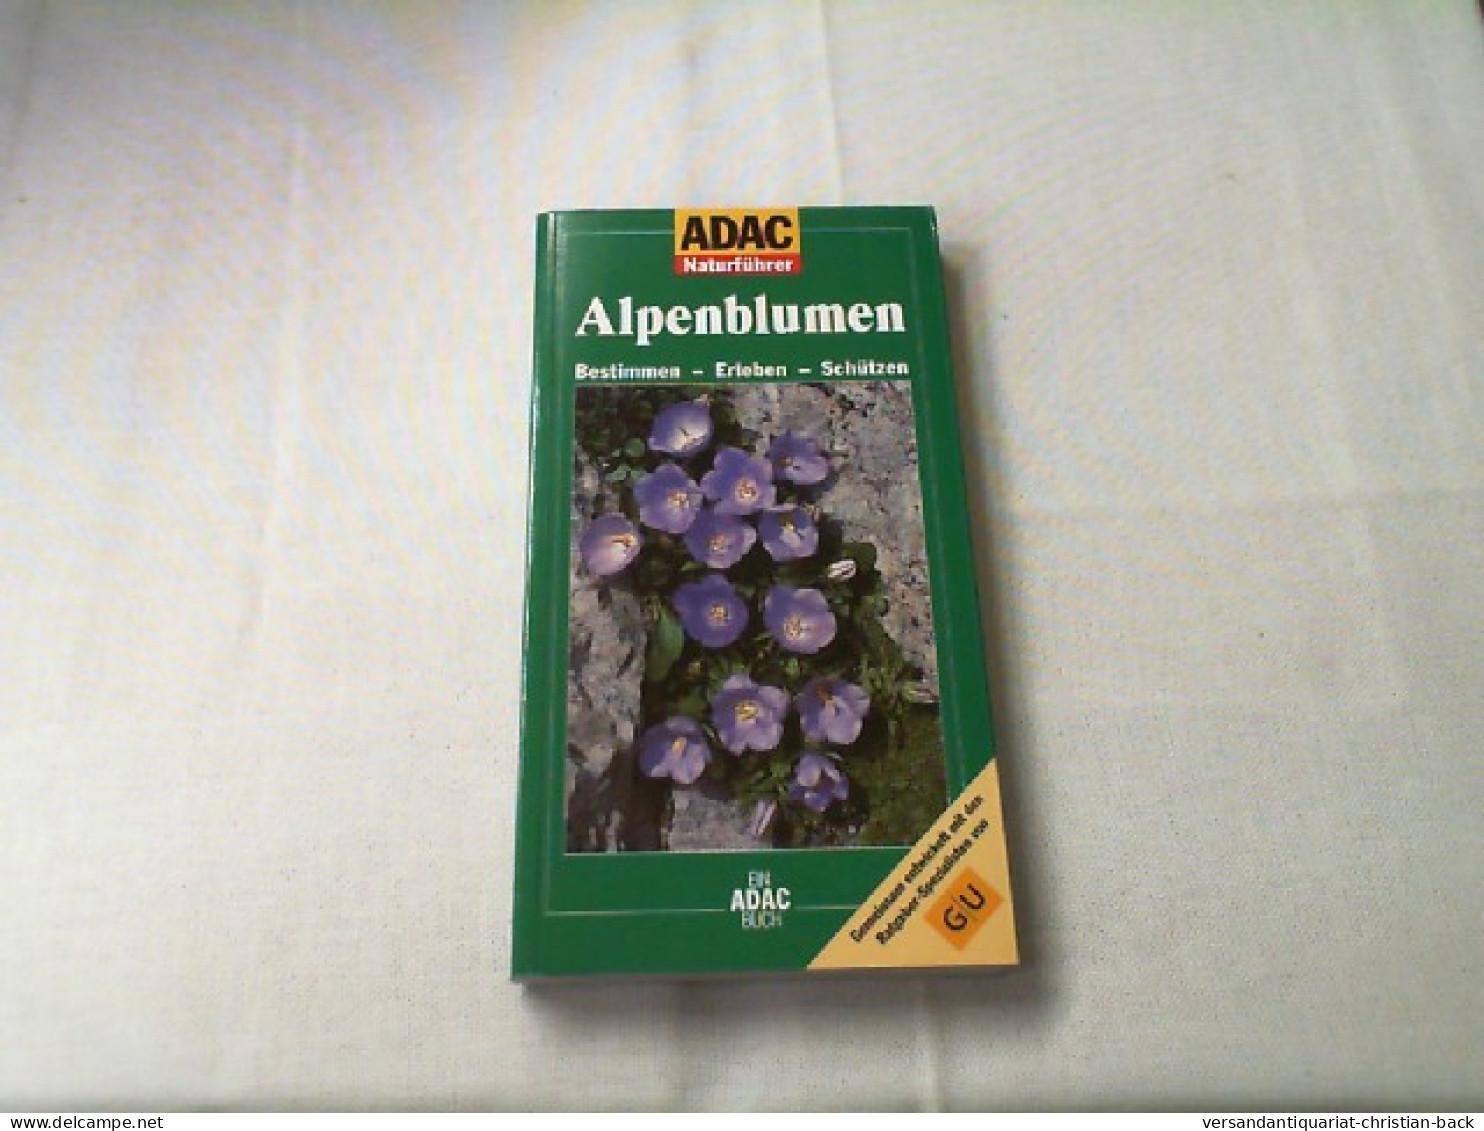 ADAC Naturführer, Alpenblumen - Nature